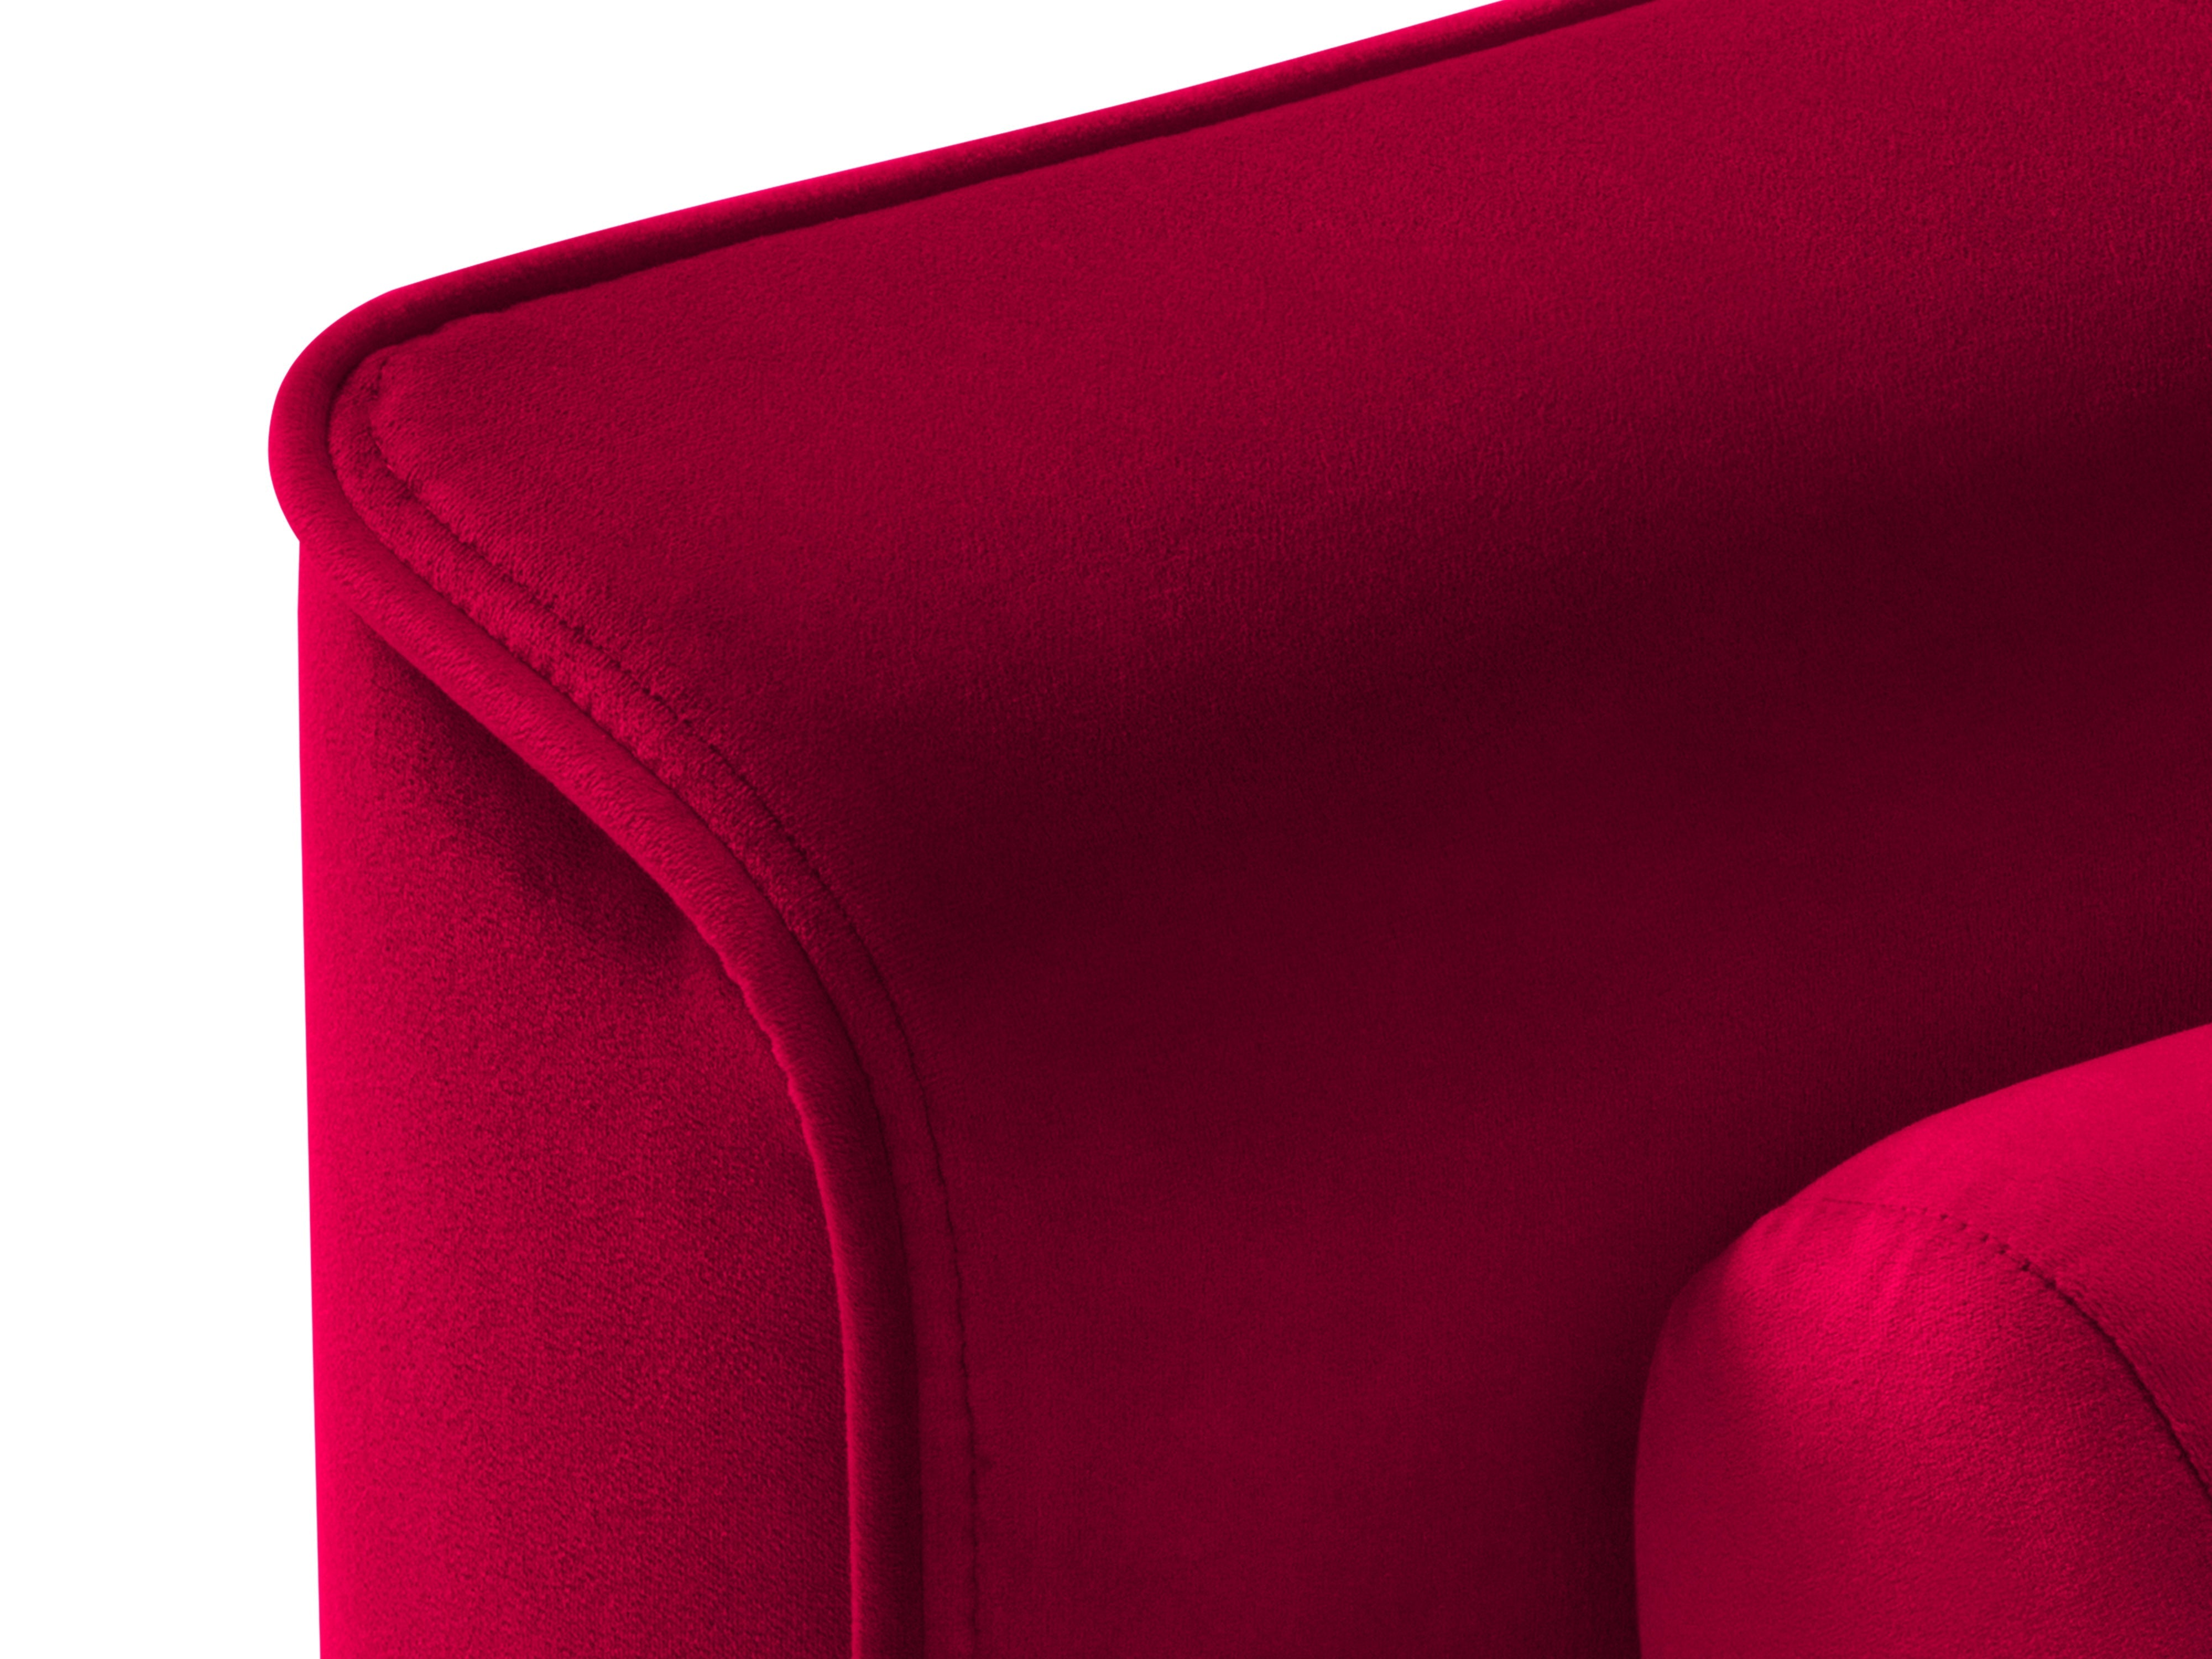 Red velvet sofa with armrests